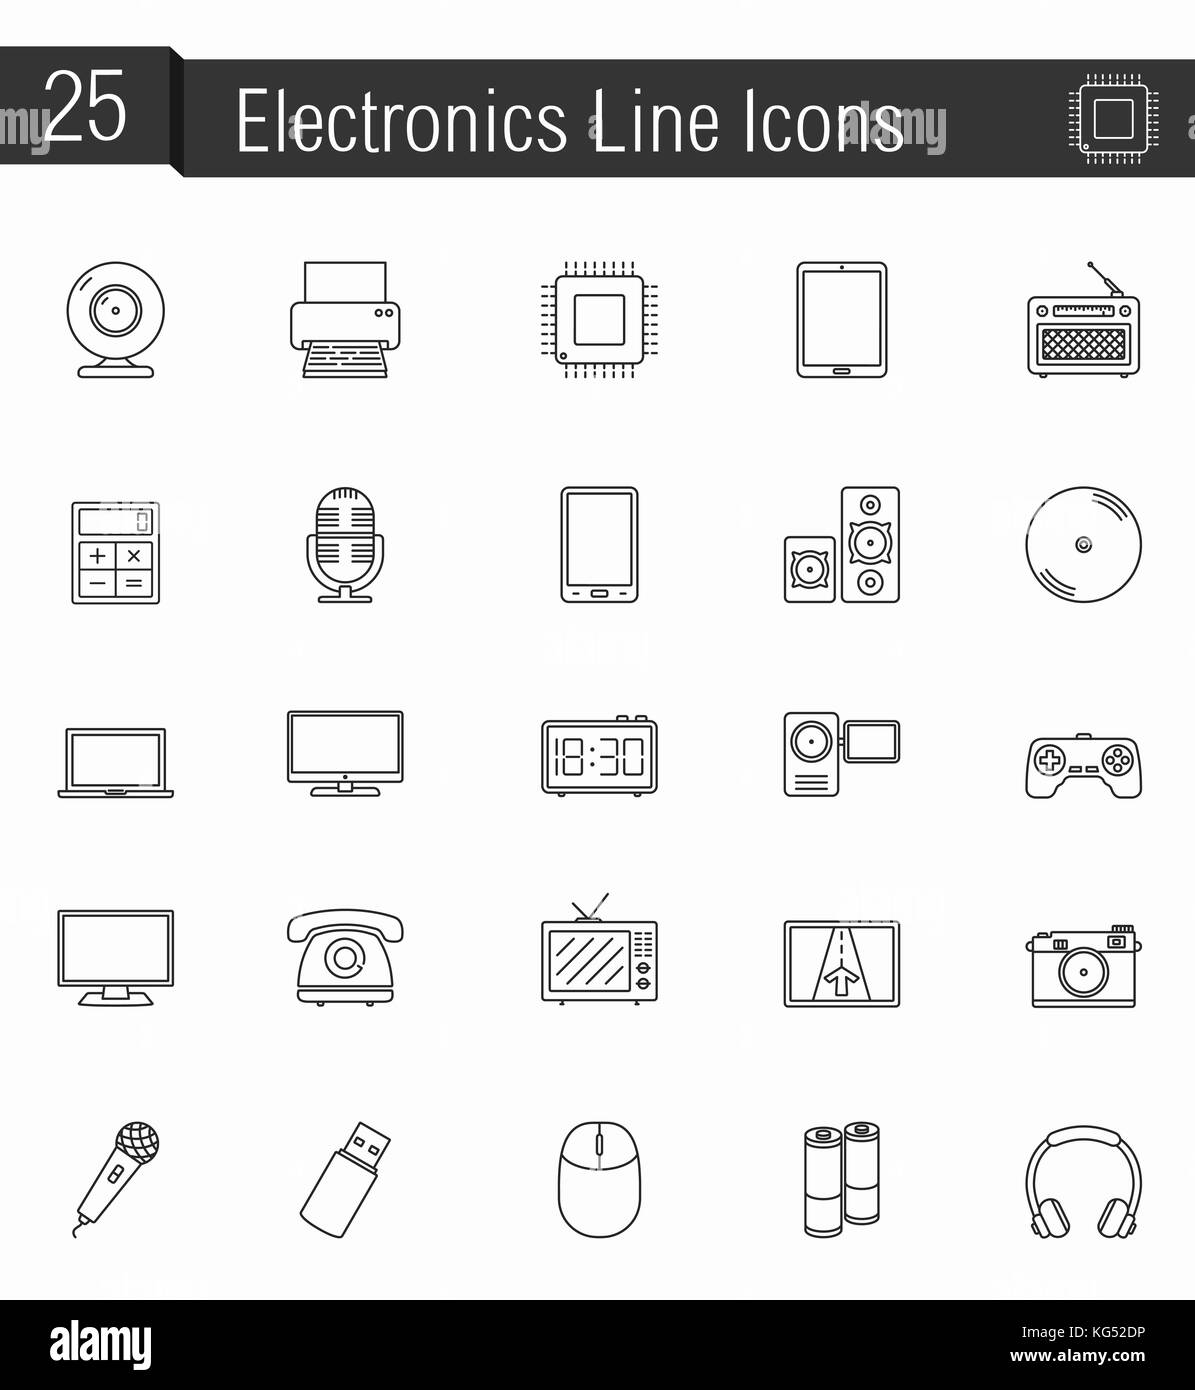 25 Electronics line icons, vector eps10 illustration Stock Photo